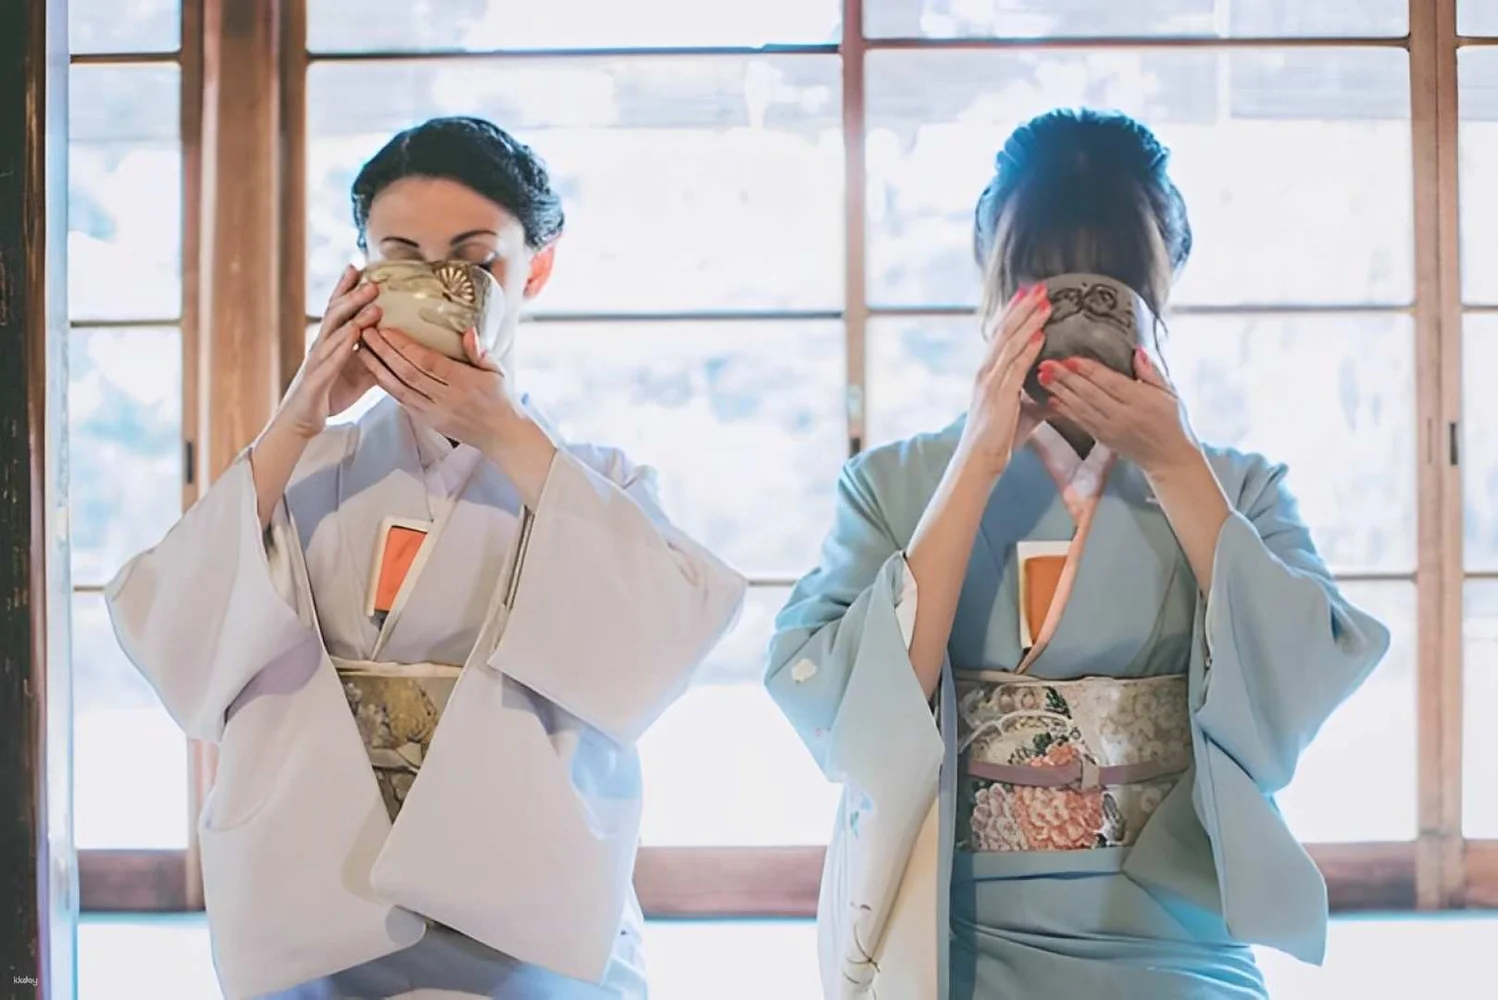 Kimono Rental and Tea Ceremony Experience in Sapporo